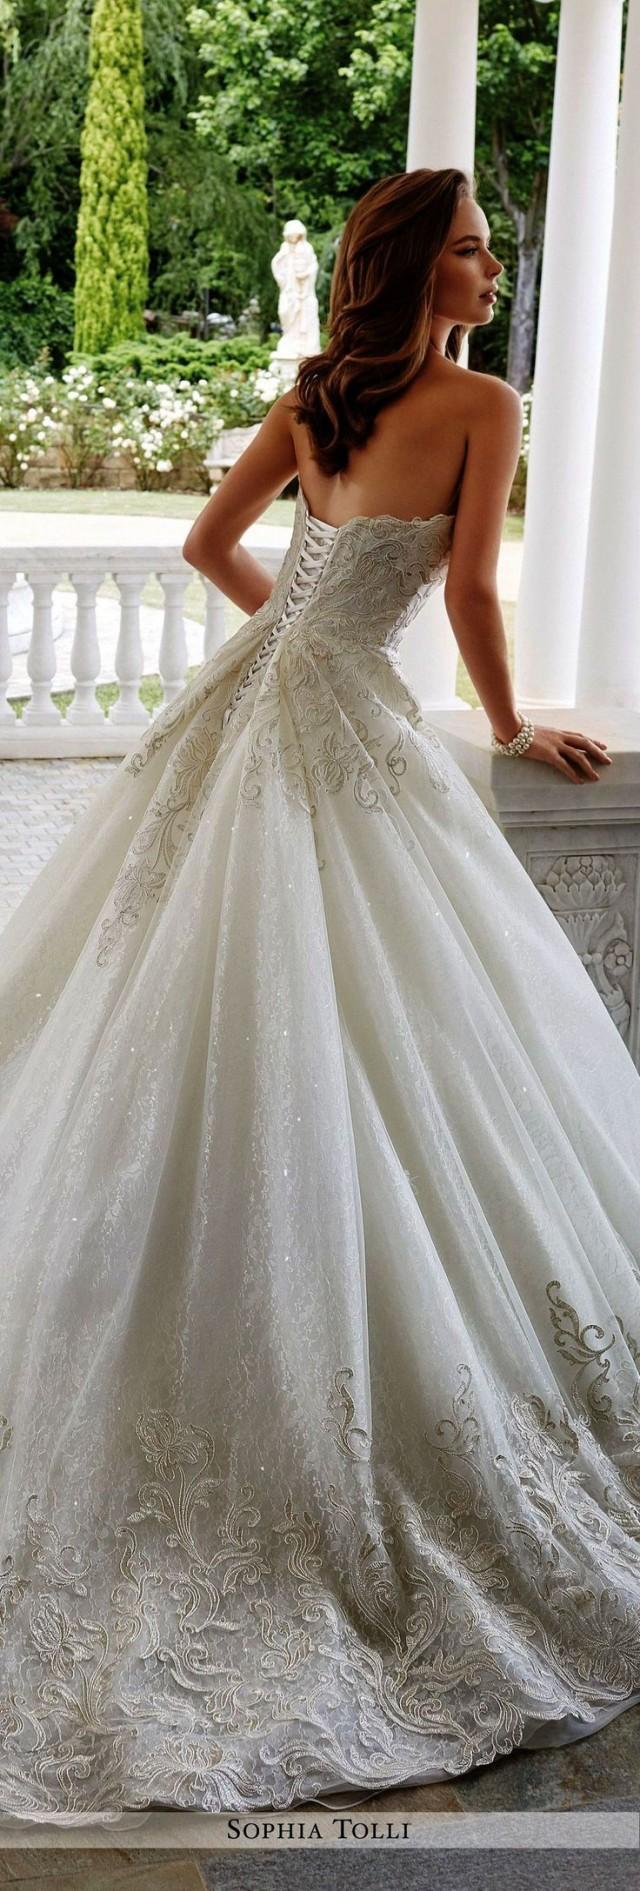 Mermaid Lace Dress Weddingbee Lace Wedding Dresses For Pregnant Brides 